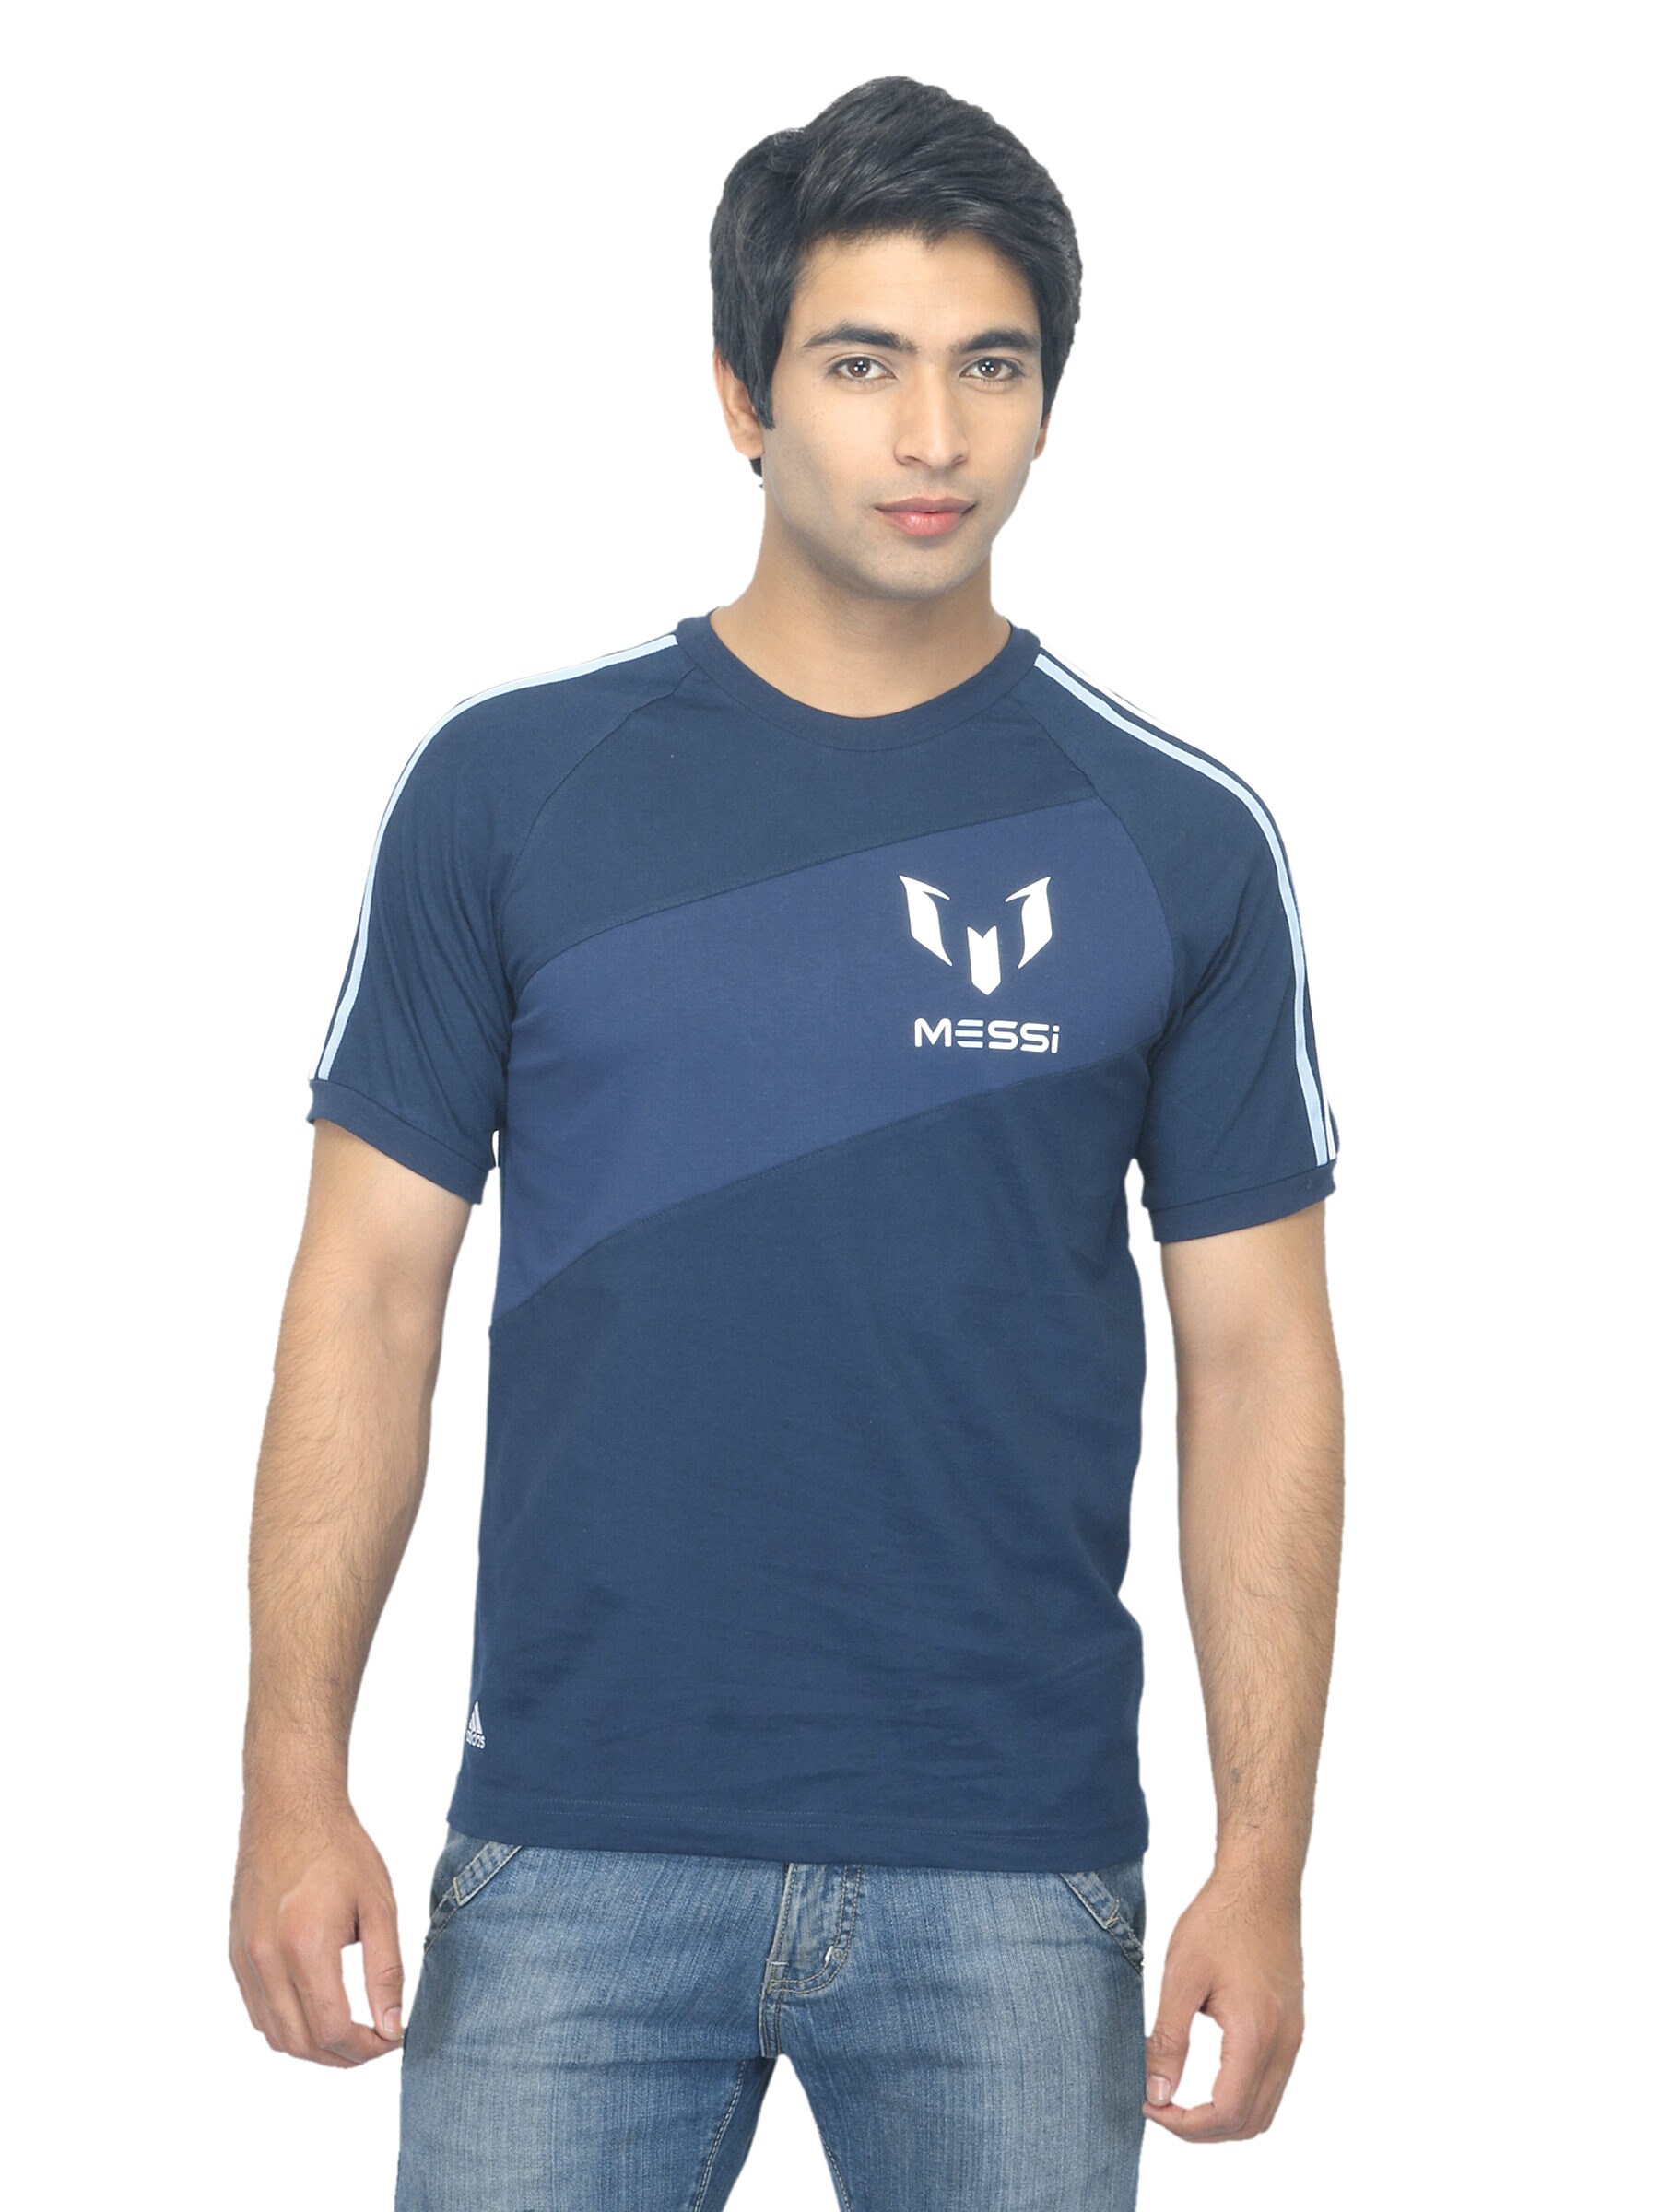 ADIDAS Men Messi Navy Blue T-shirt